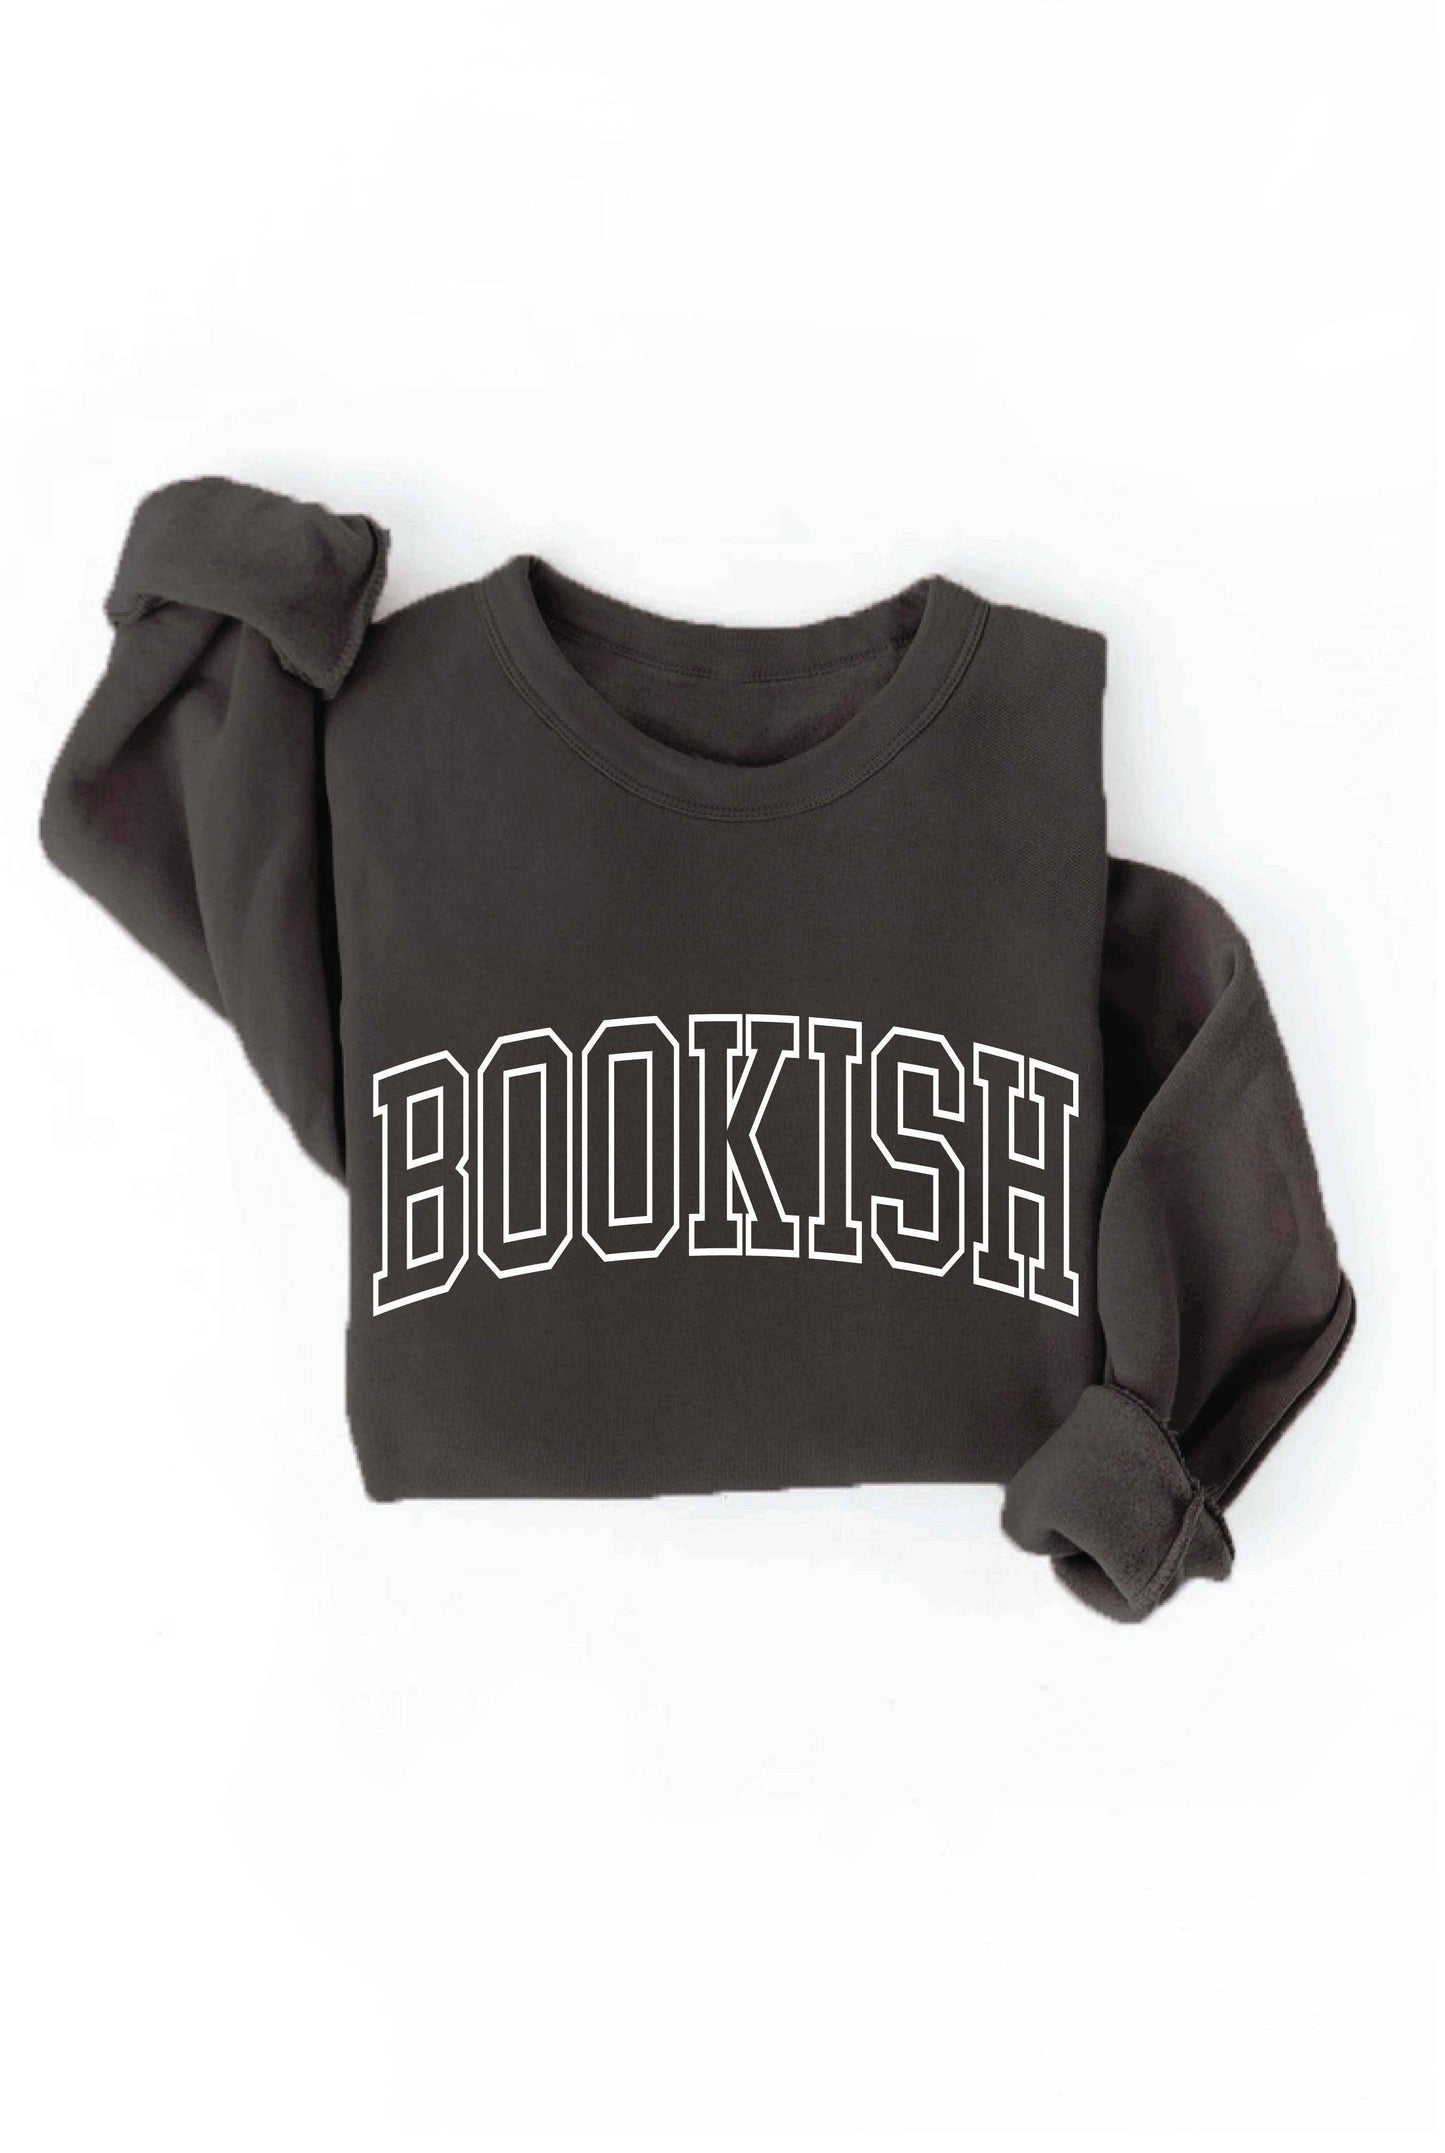 Sweatshirt: BOOKISH (White on Black)